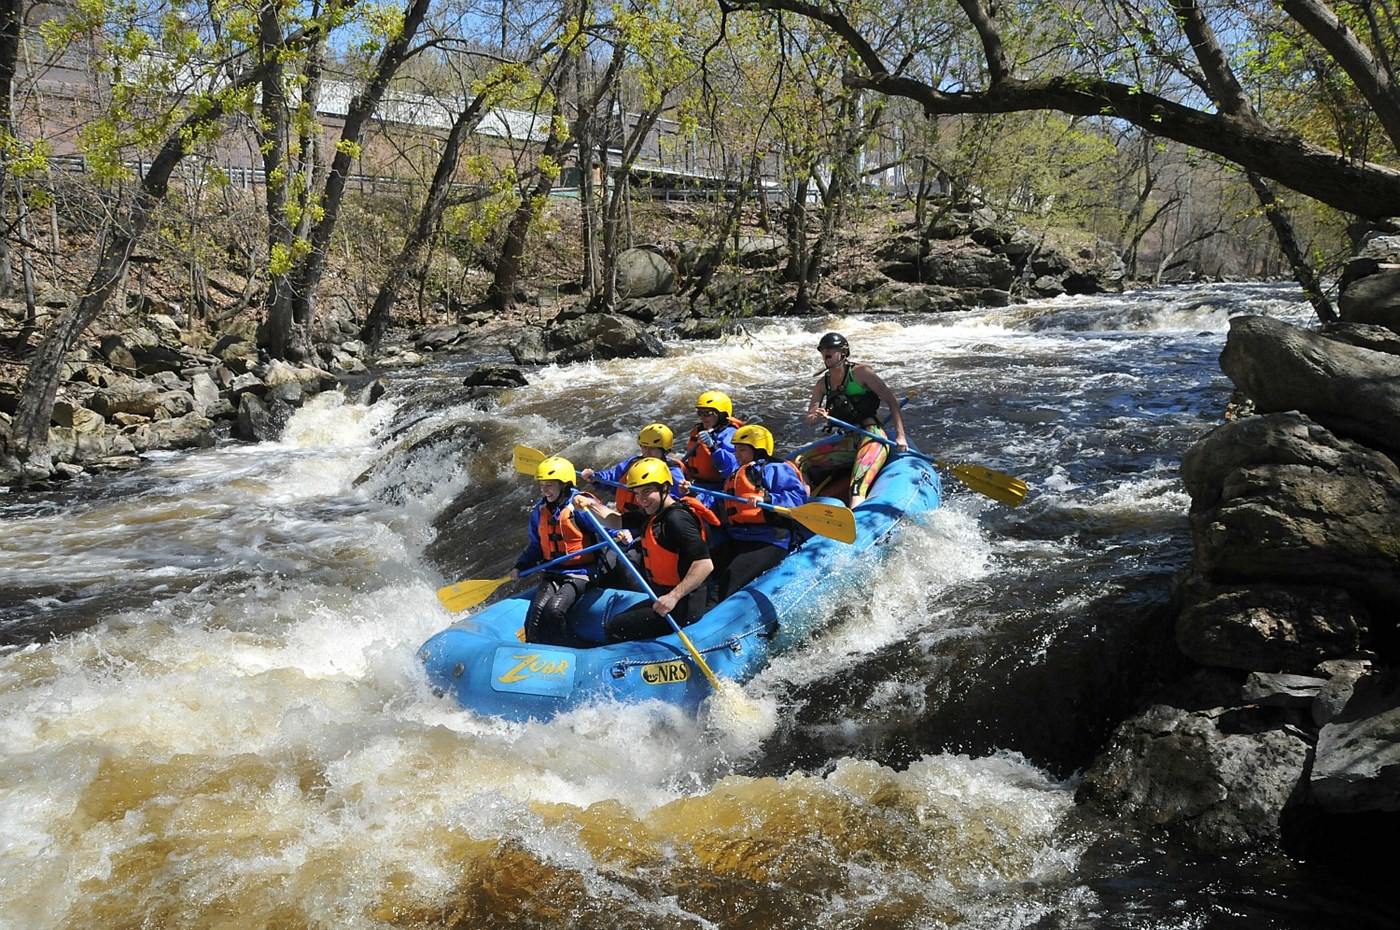 Raft entering a rapid